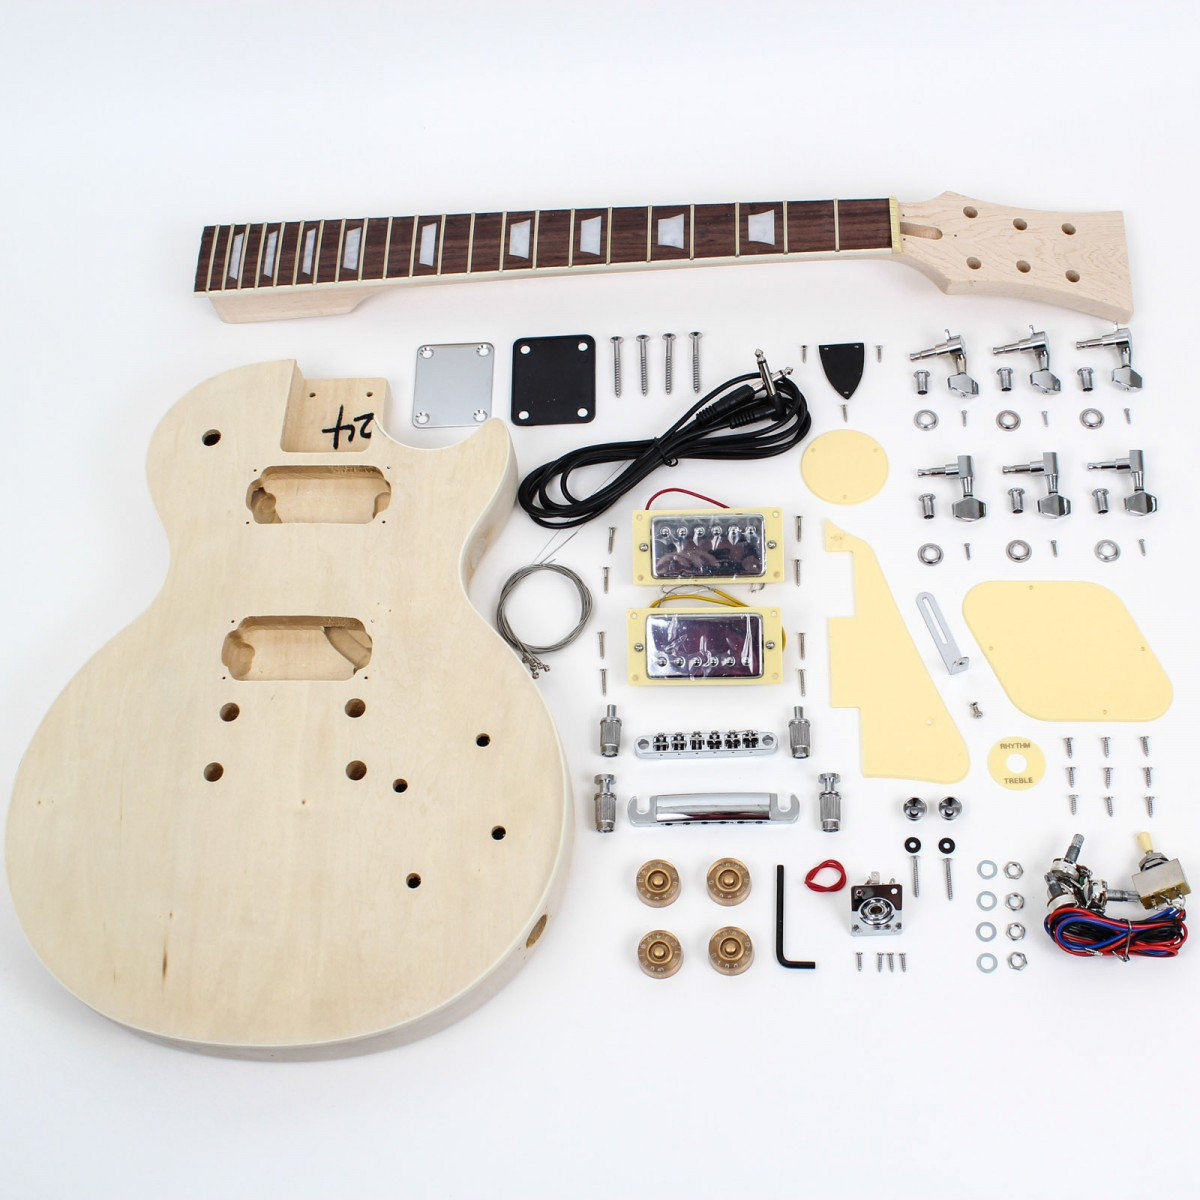 Best ideas about Les Paul DIY Kit
. Save or Pin Les Paul Style Guitar Kit DIY Guitars Now.